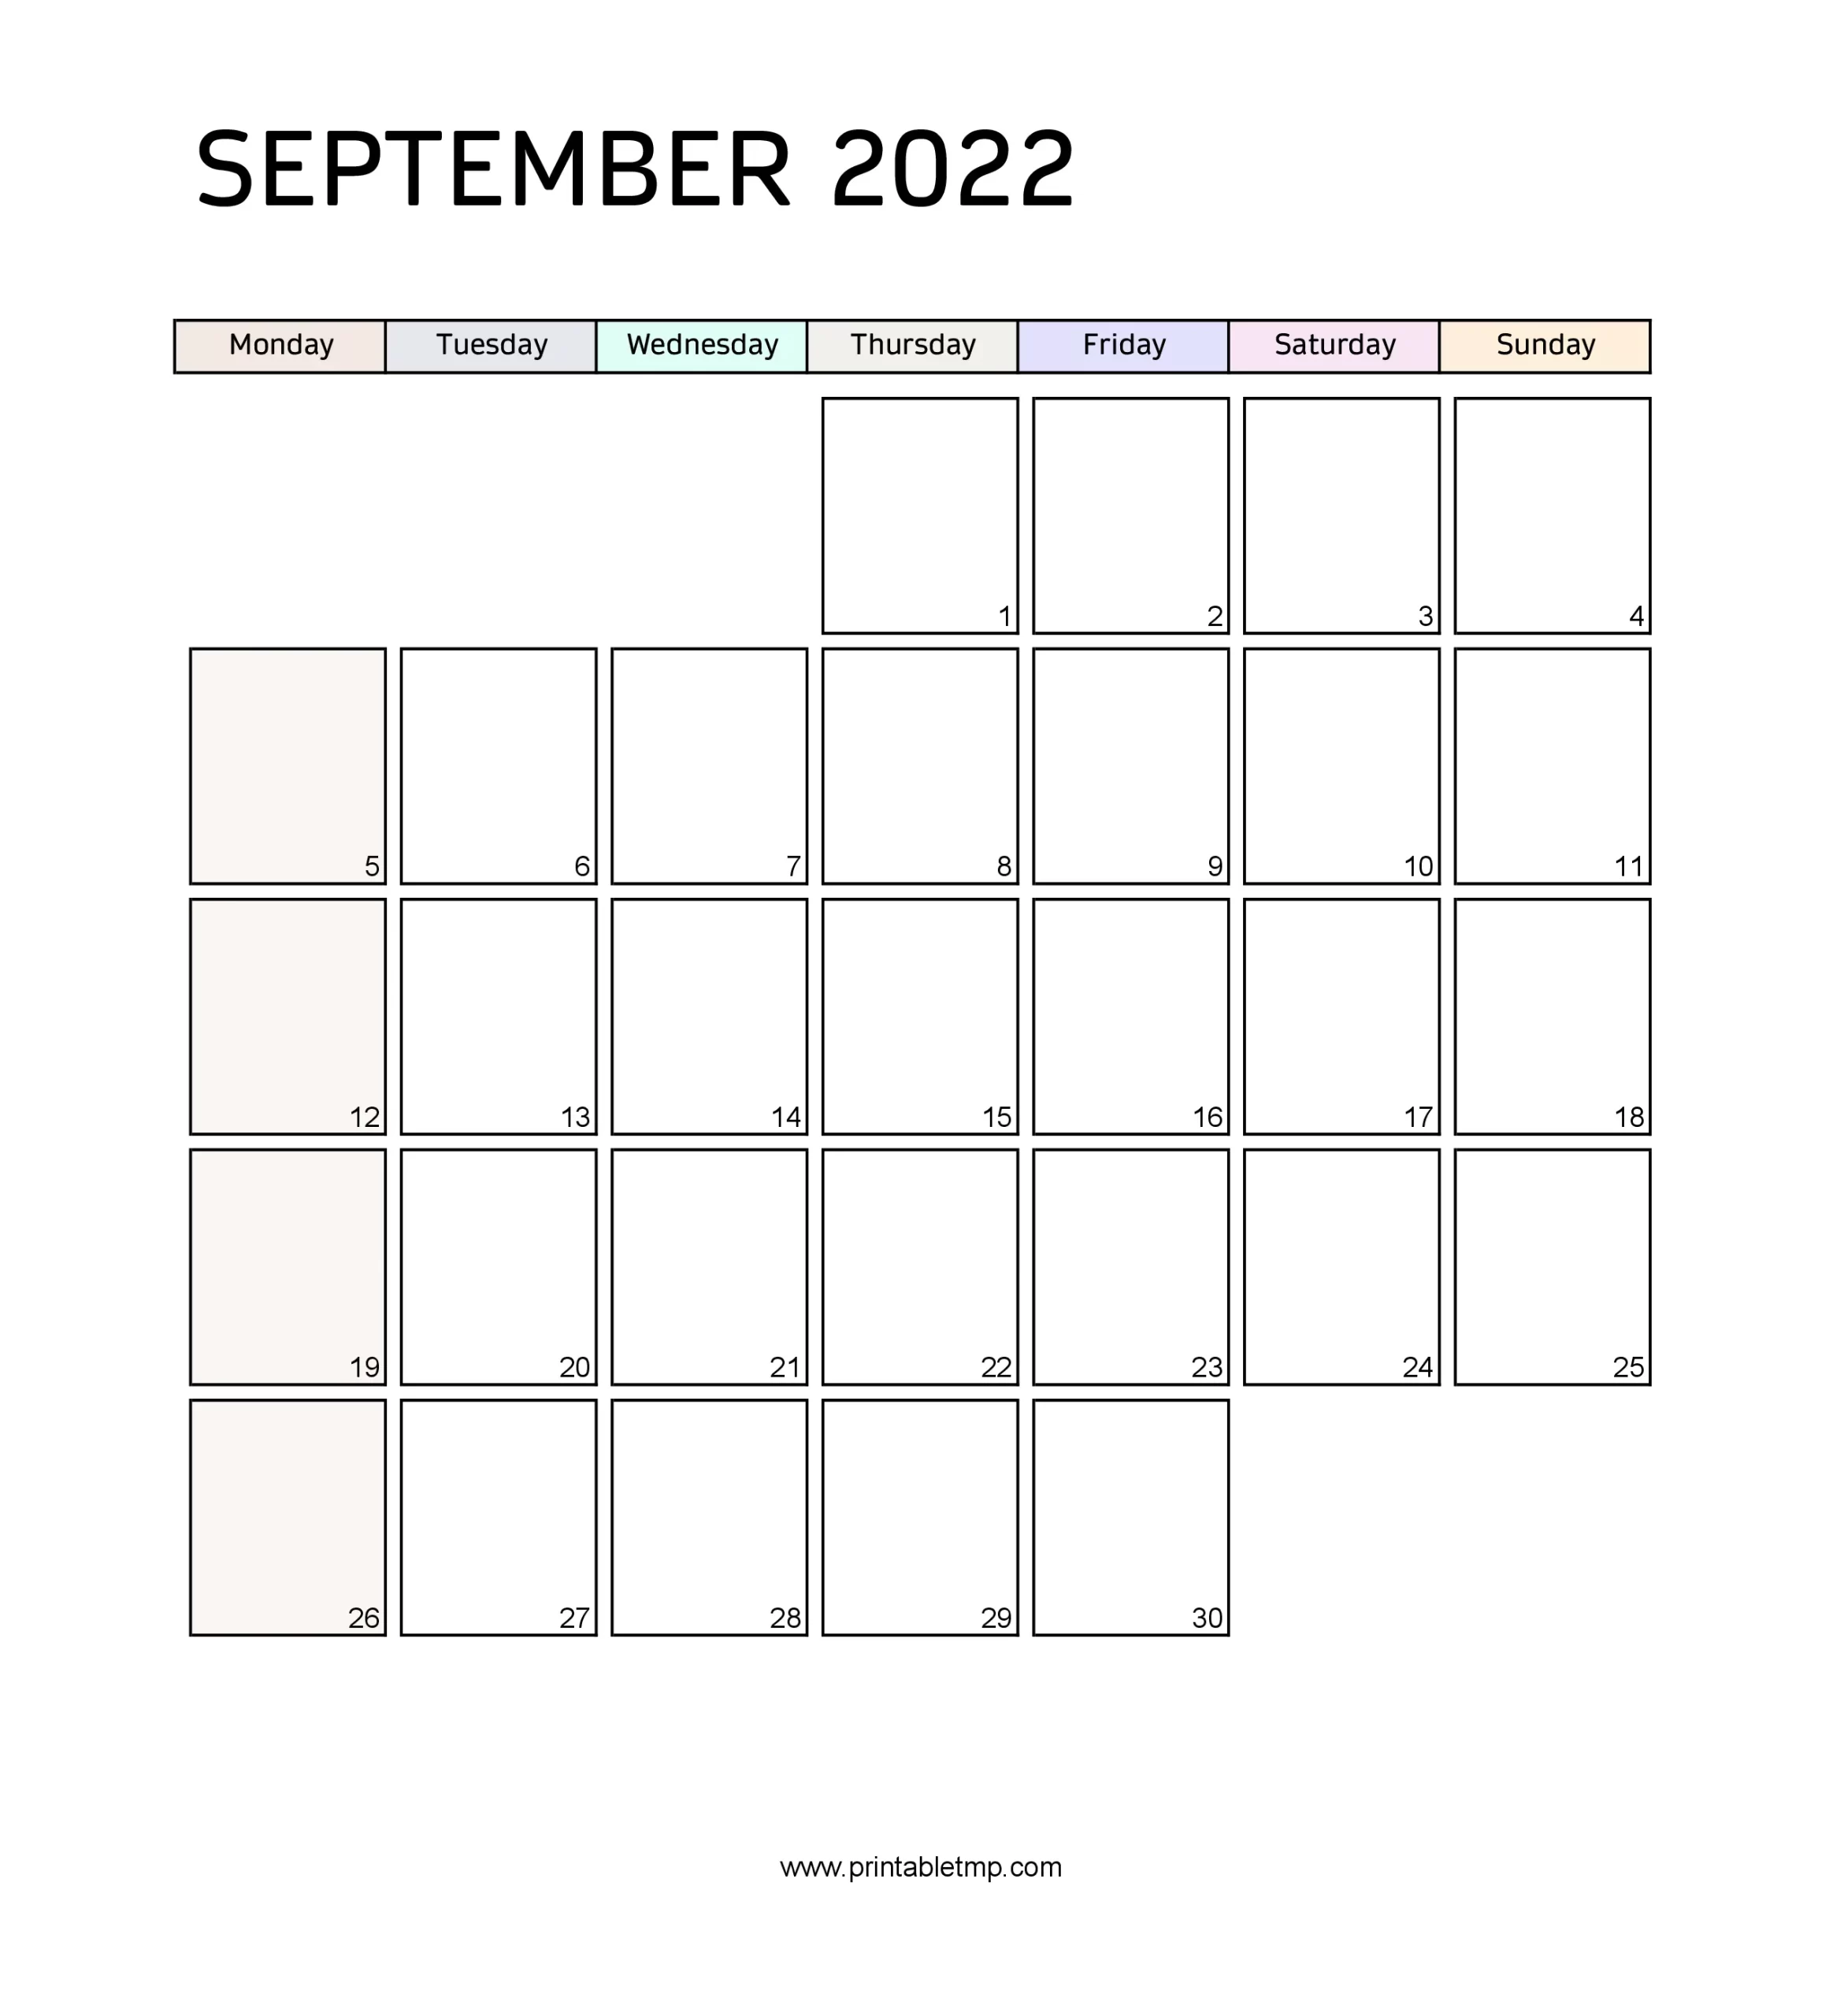 Cute September 2022 Calendar Template to Print